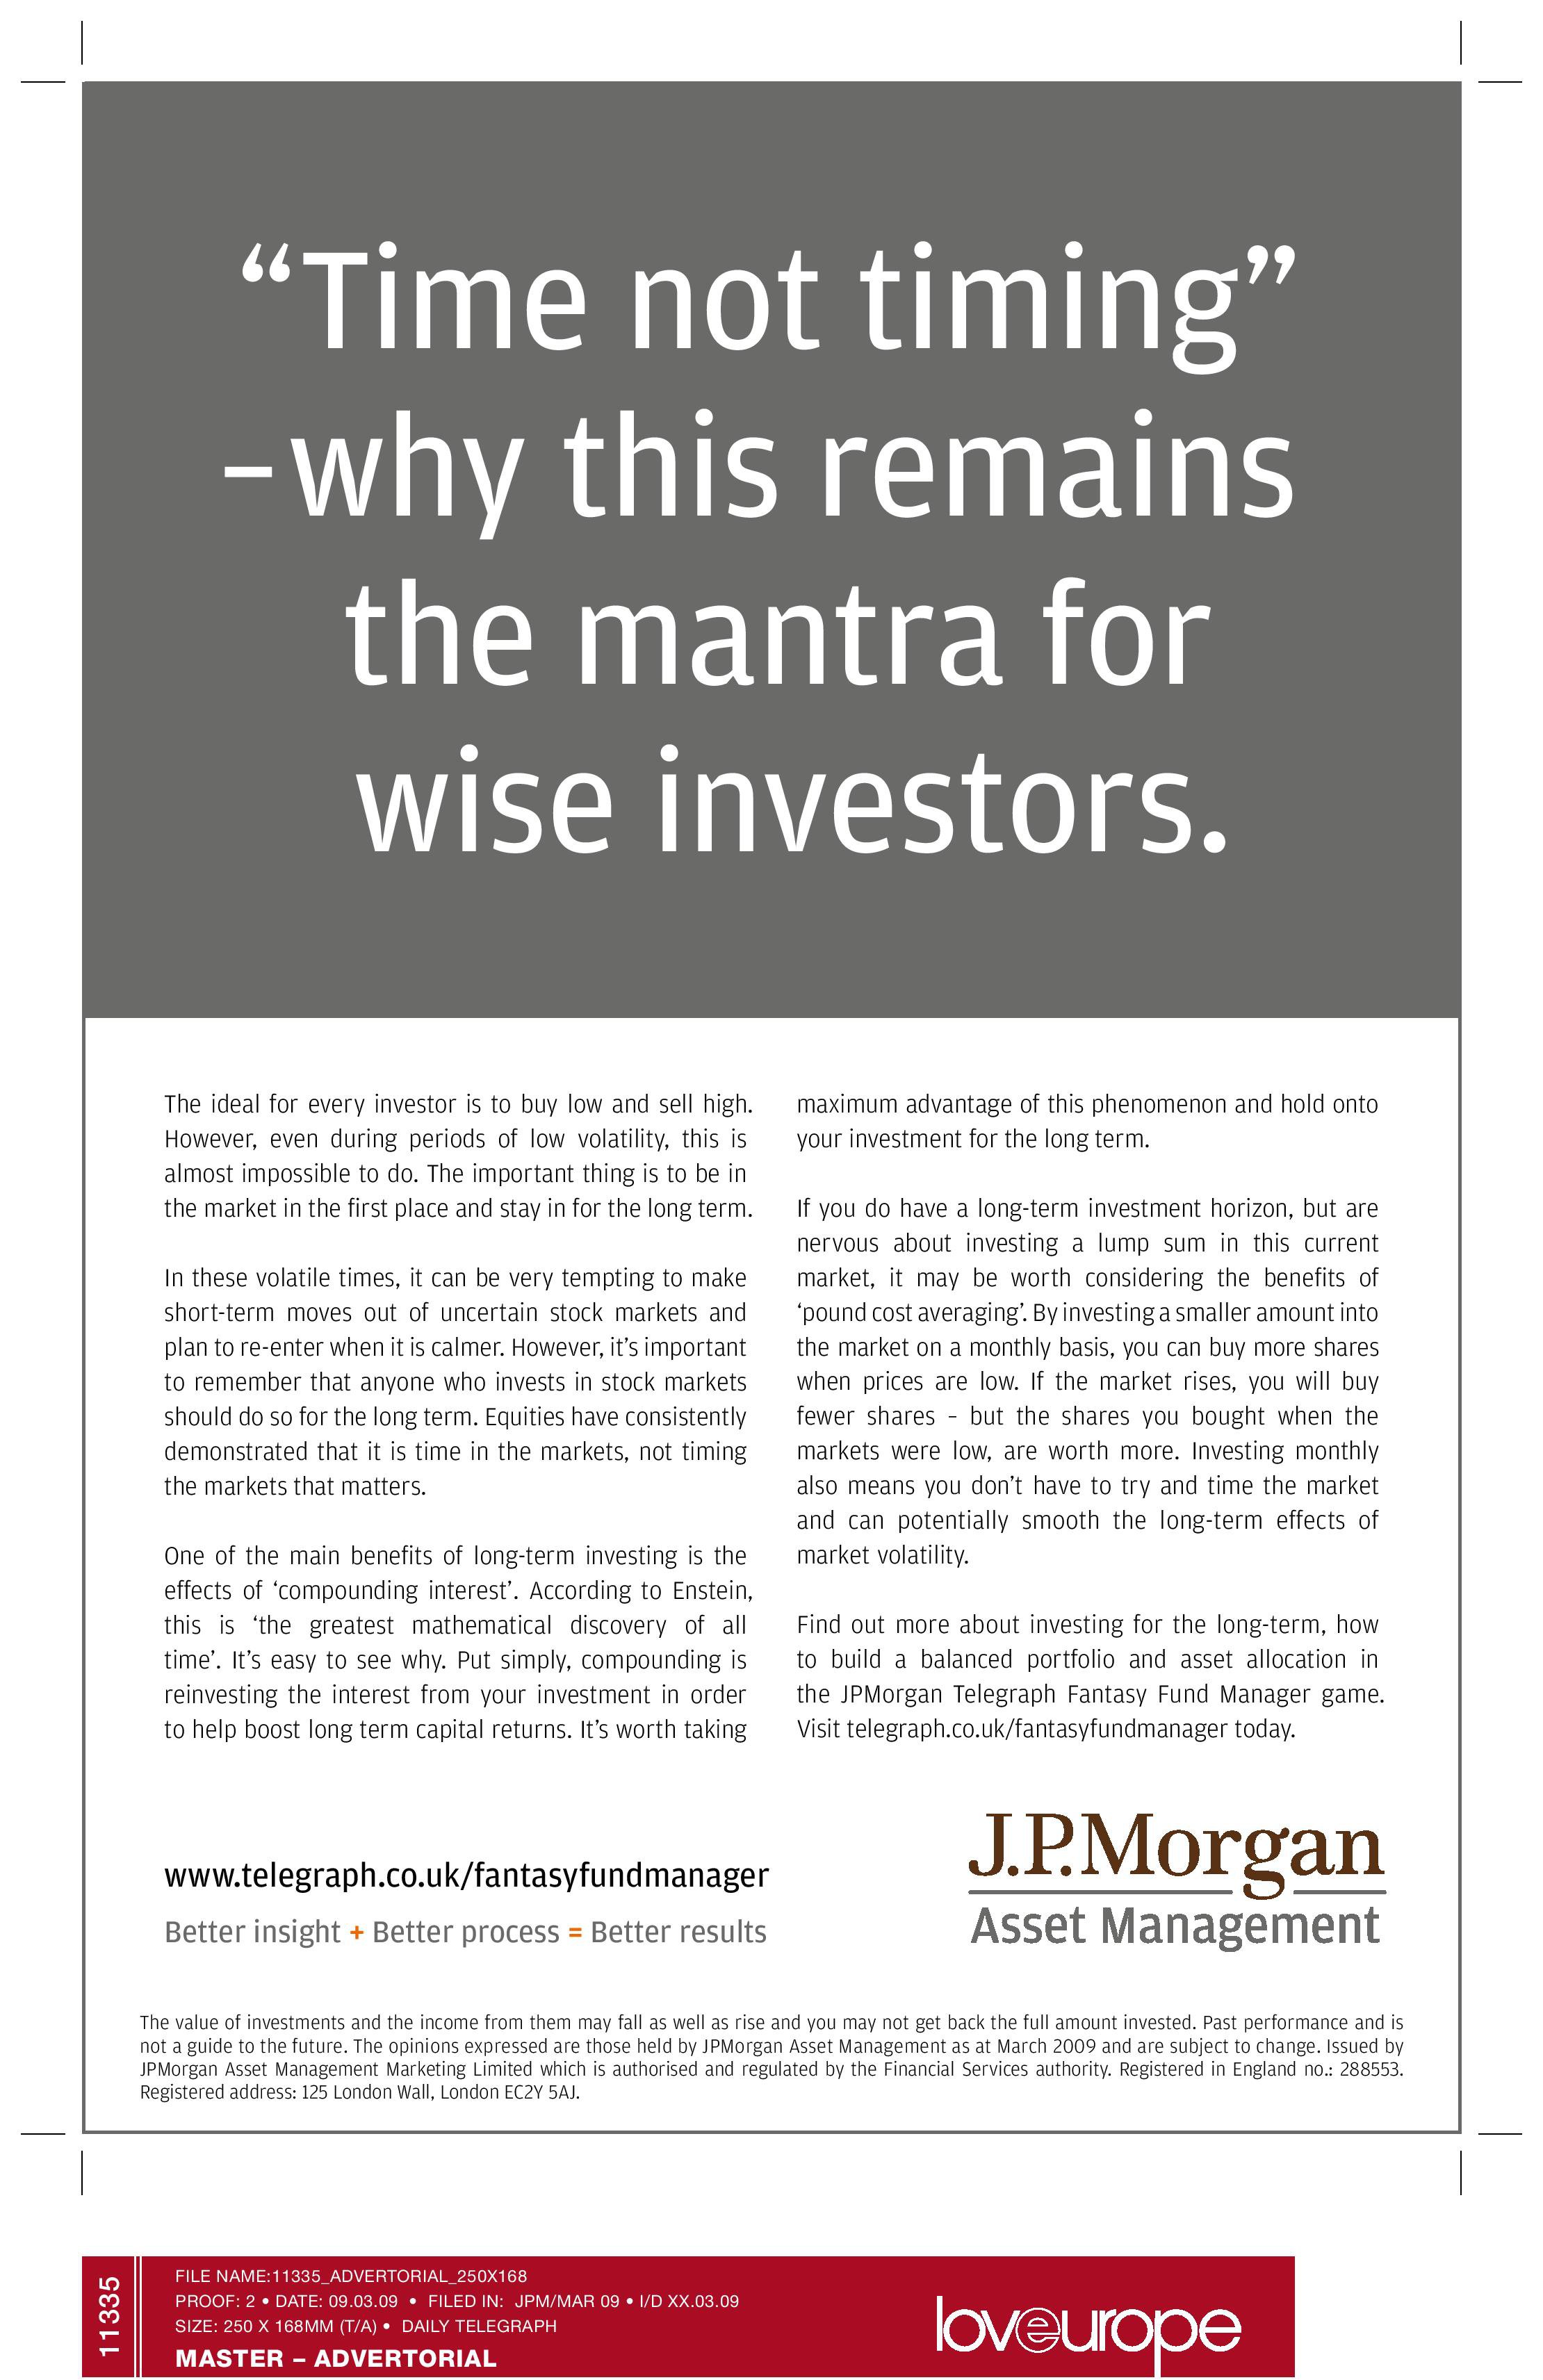 JP Morgan advert